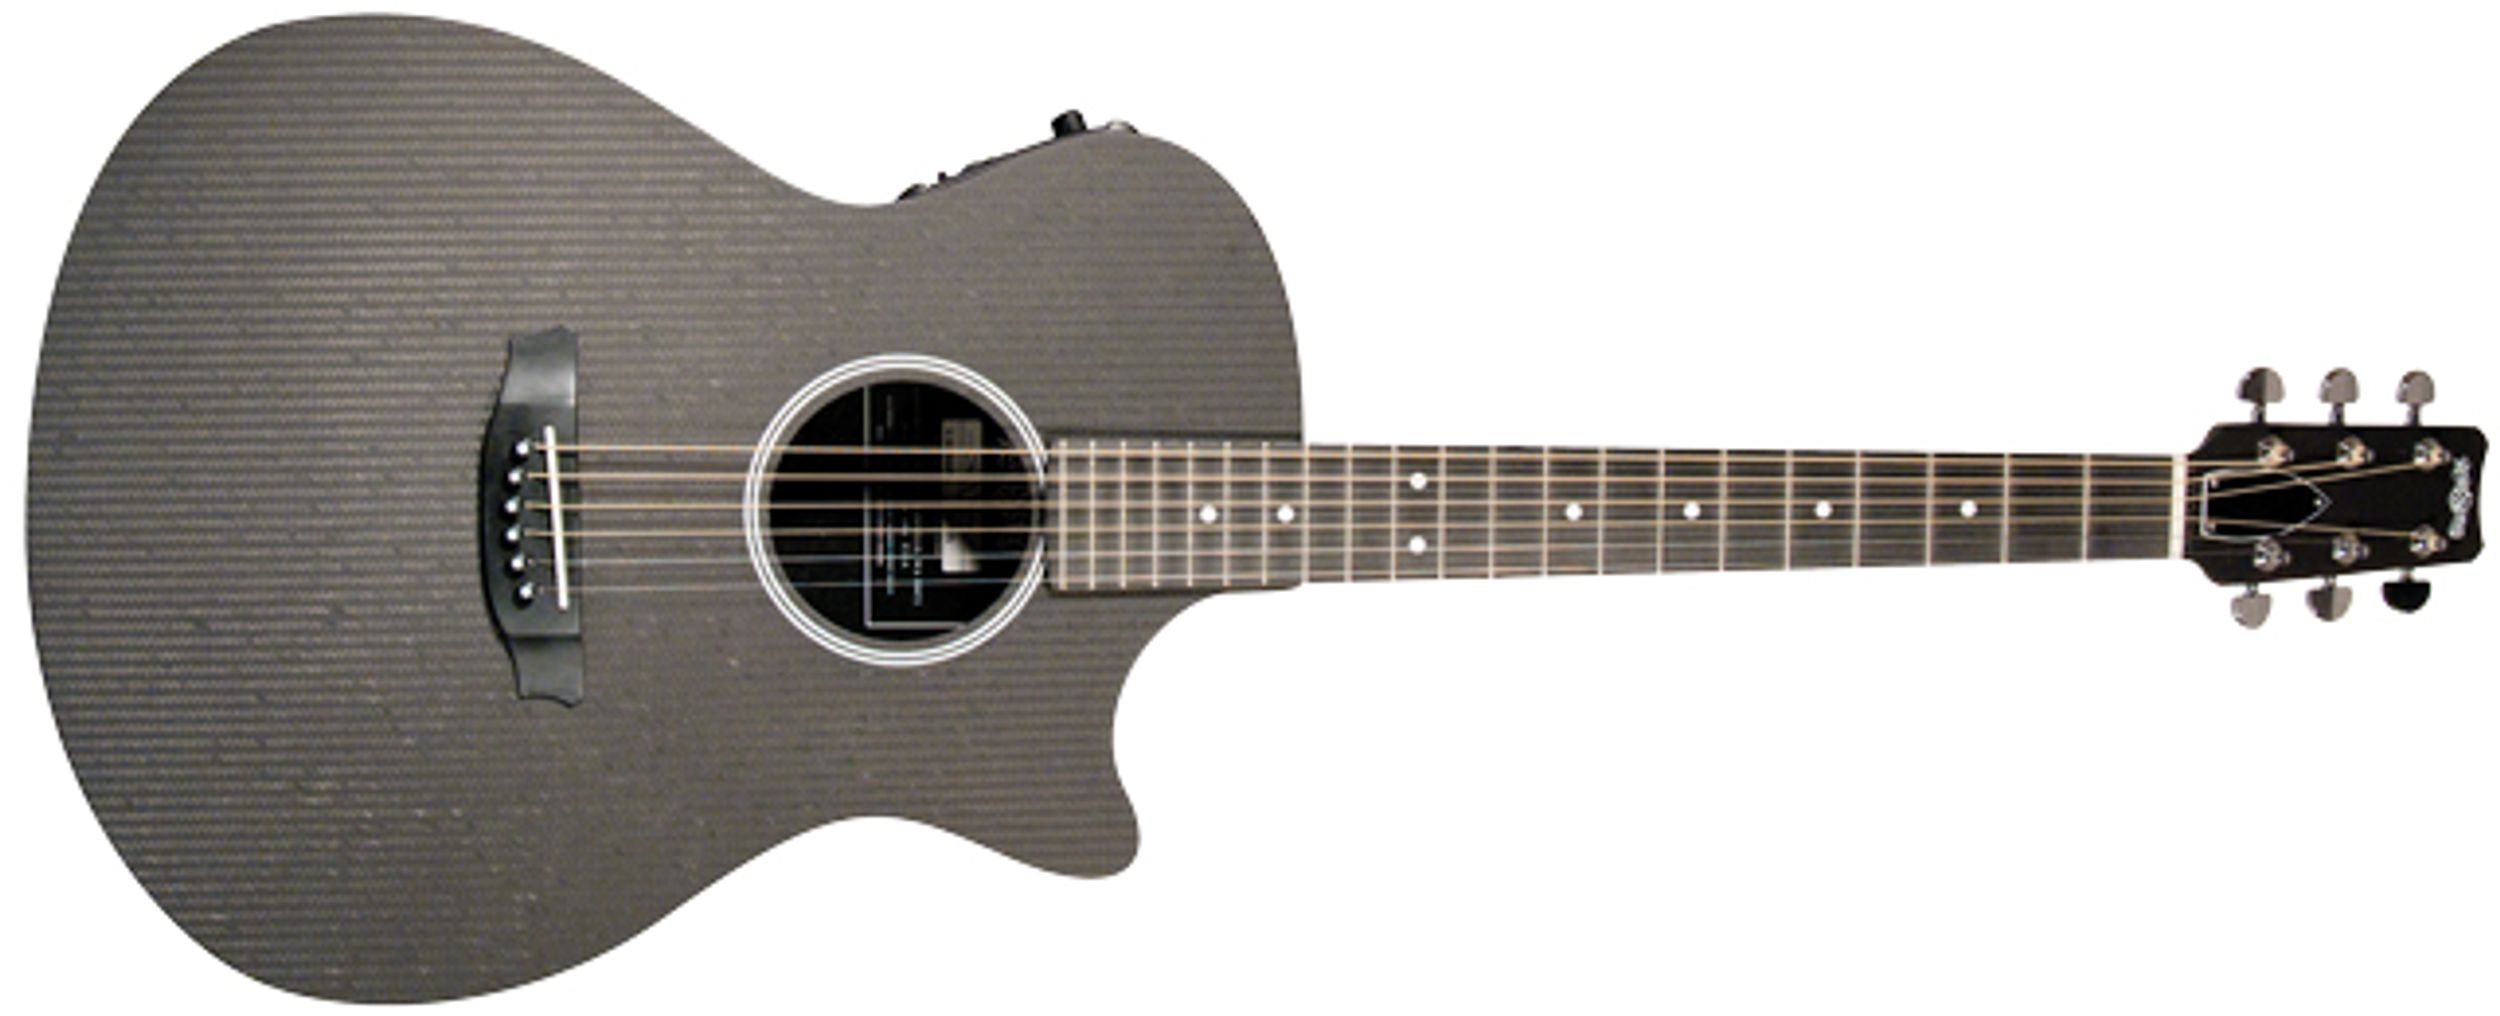 Rainsong S-OM1000N2 Studio Series OM Acoustic Guitar Review